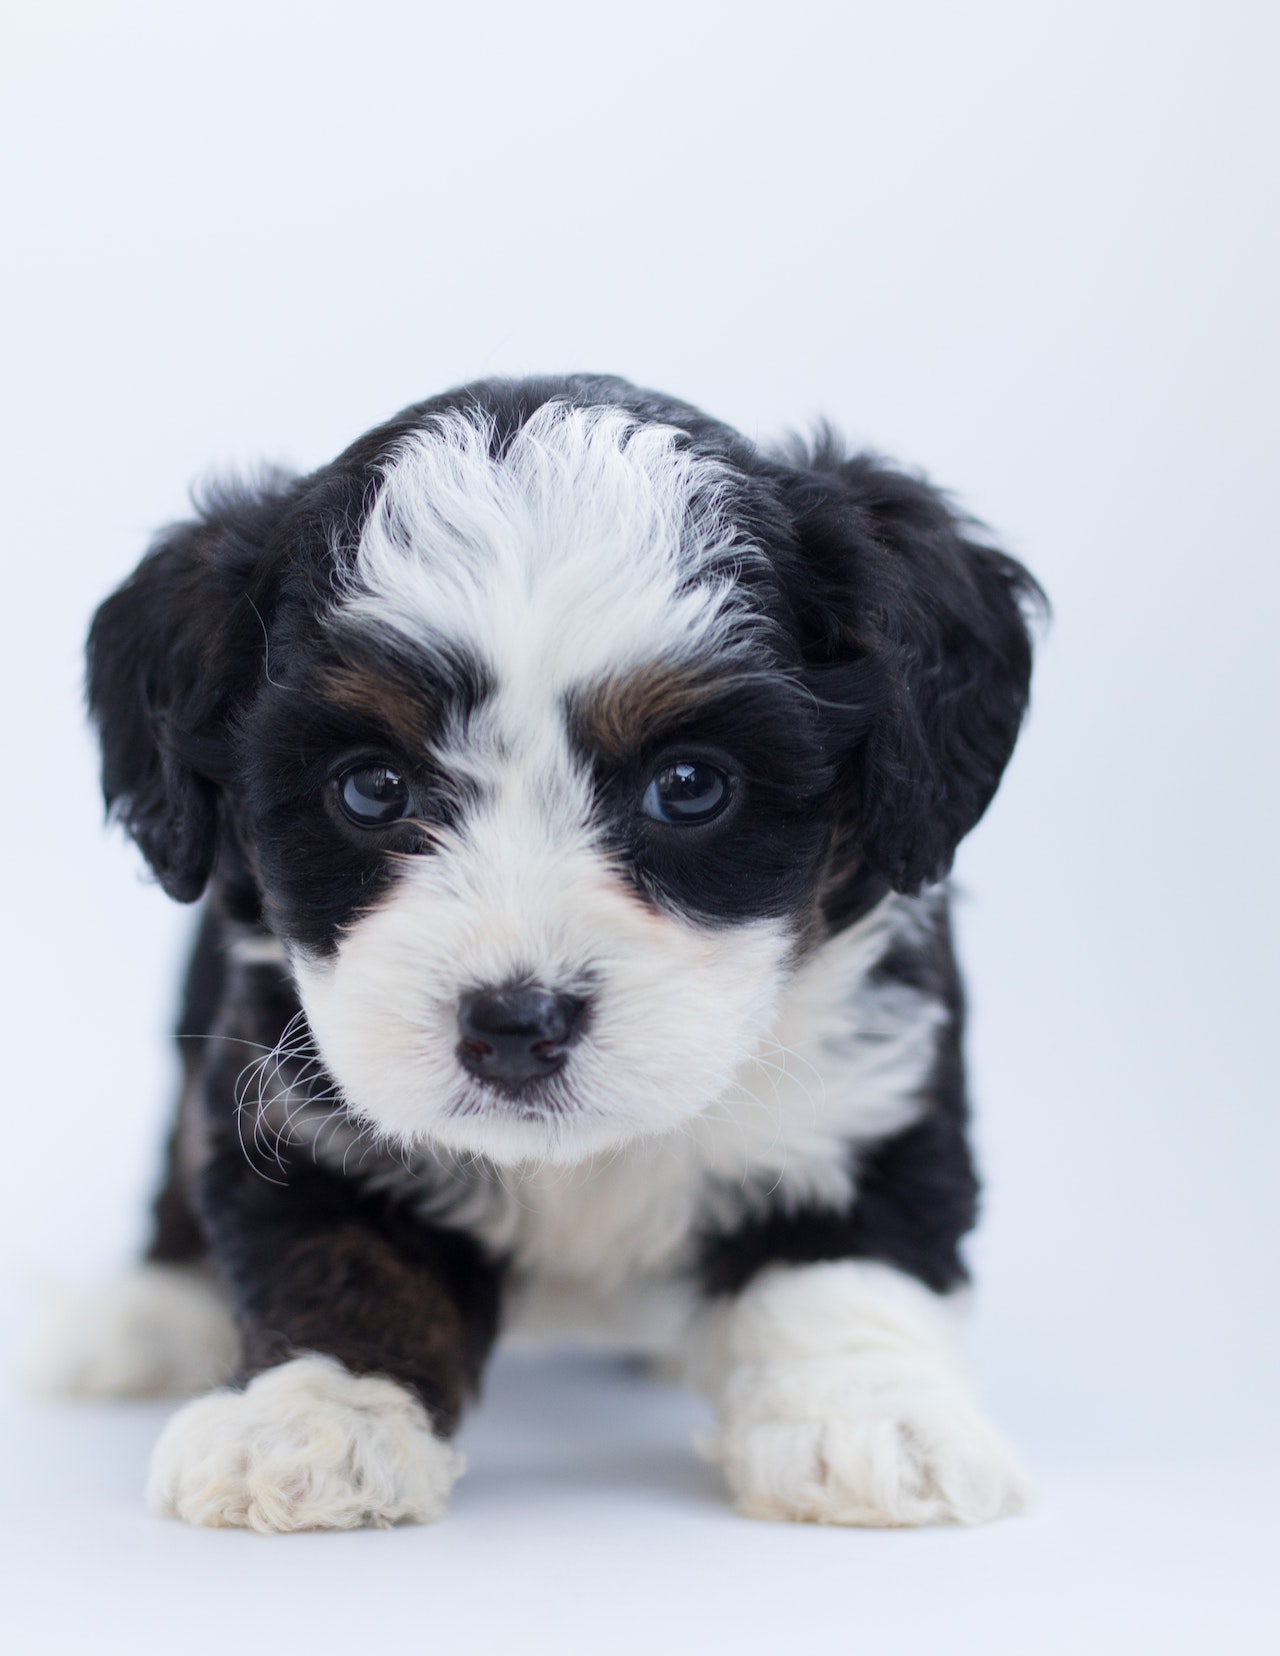 5 ways to identify a responsible dog breeder